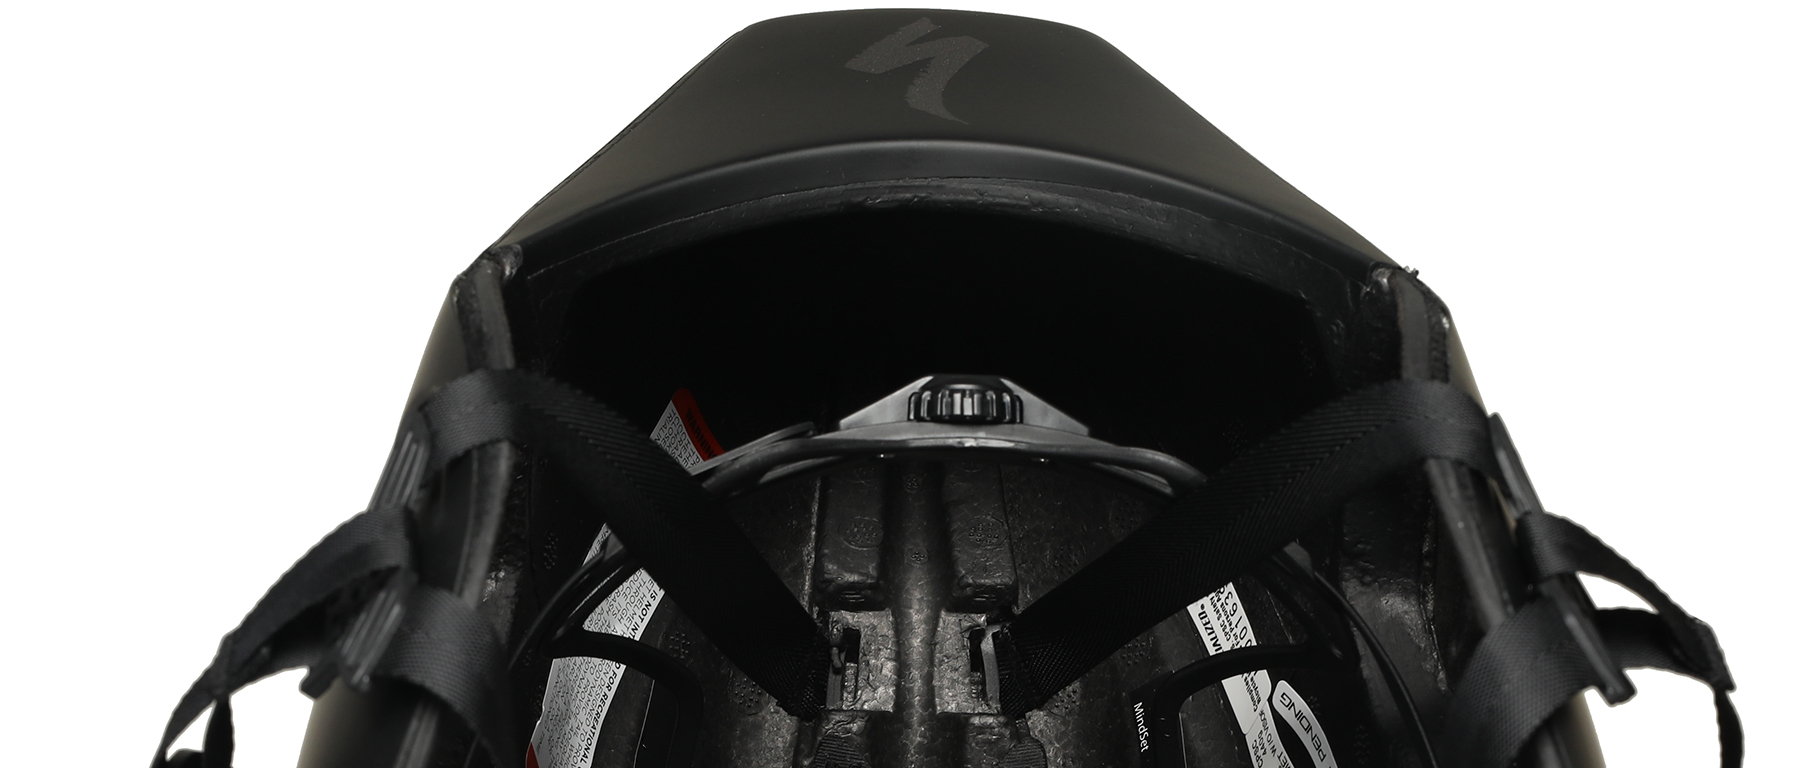 Specialized S-Works TT Helmet